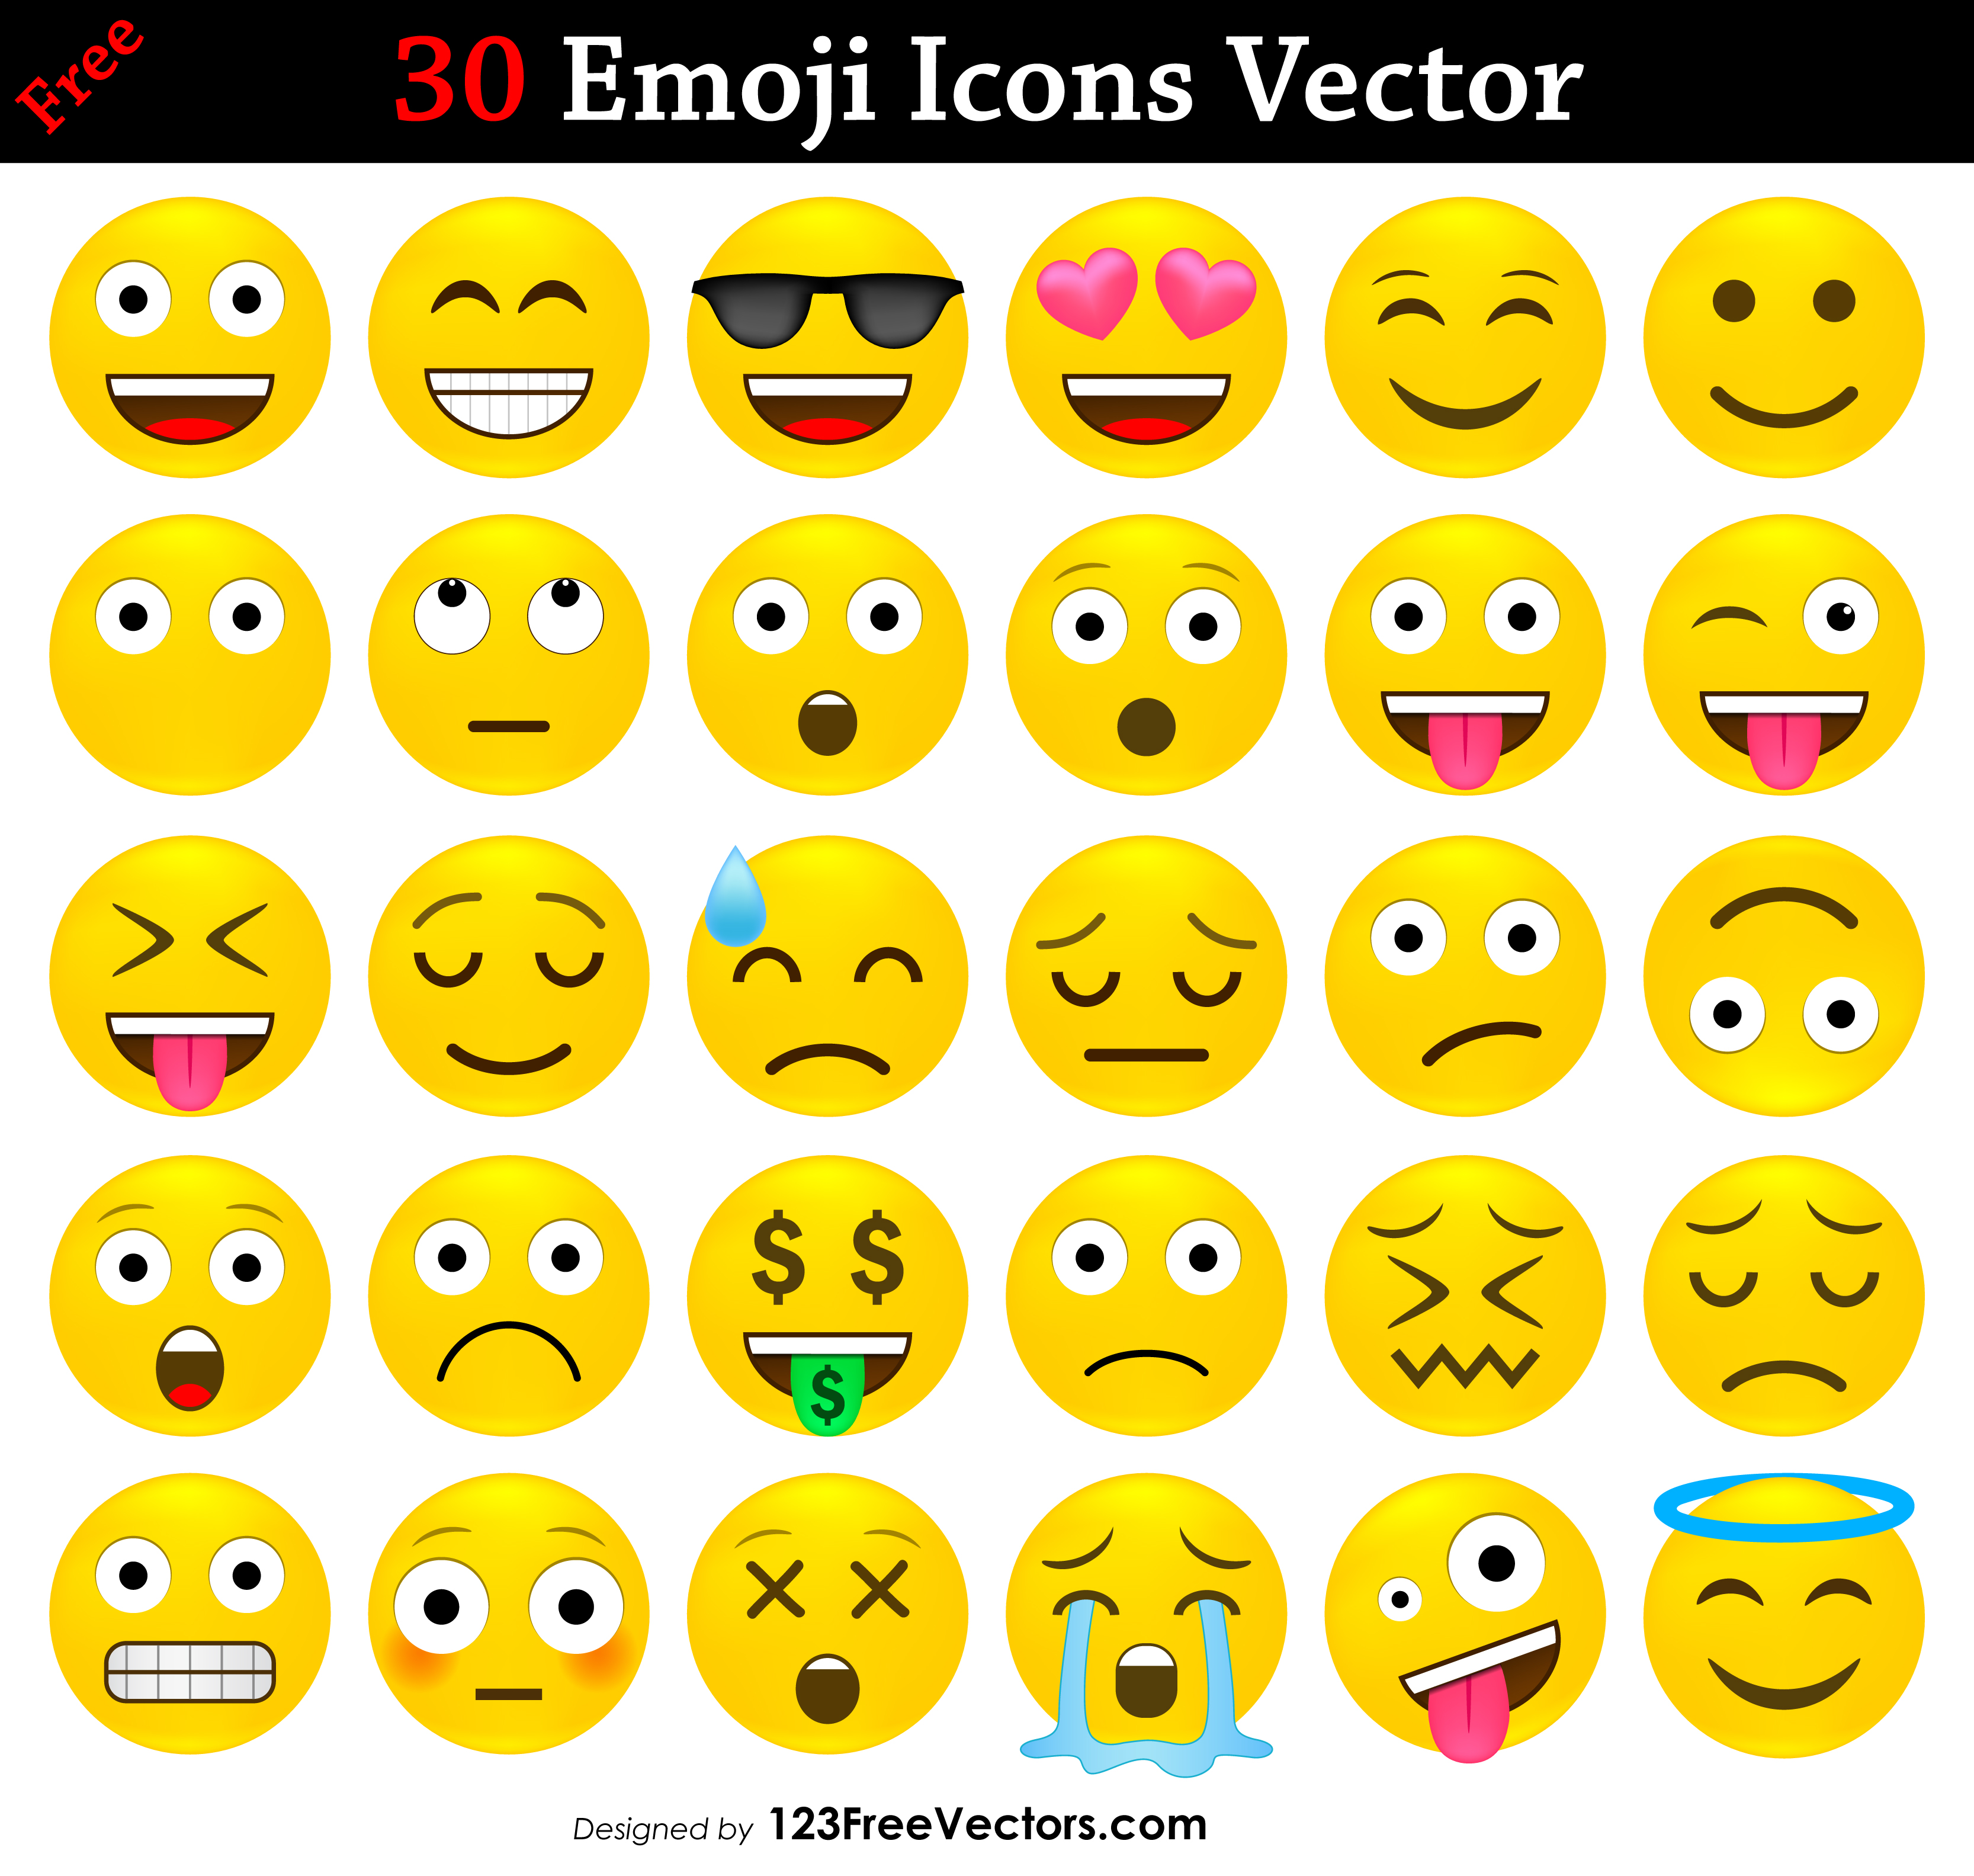 Emoji icons. ЭМОДЖИ. Иконки эмодзи. Эмодзи вектор. Иконки эмодзи вектор.